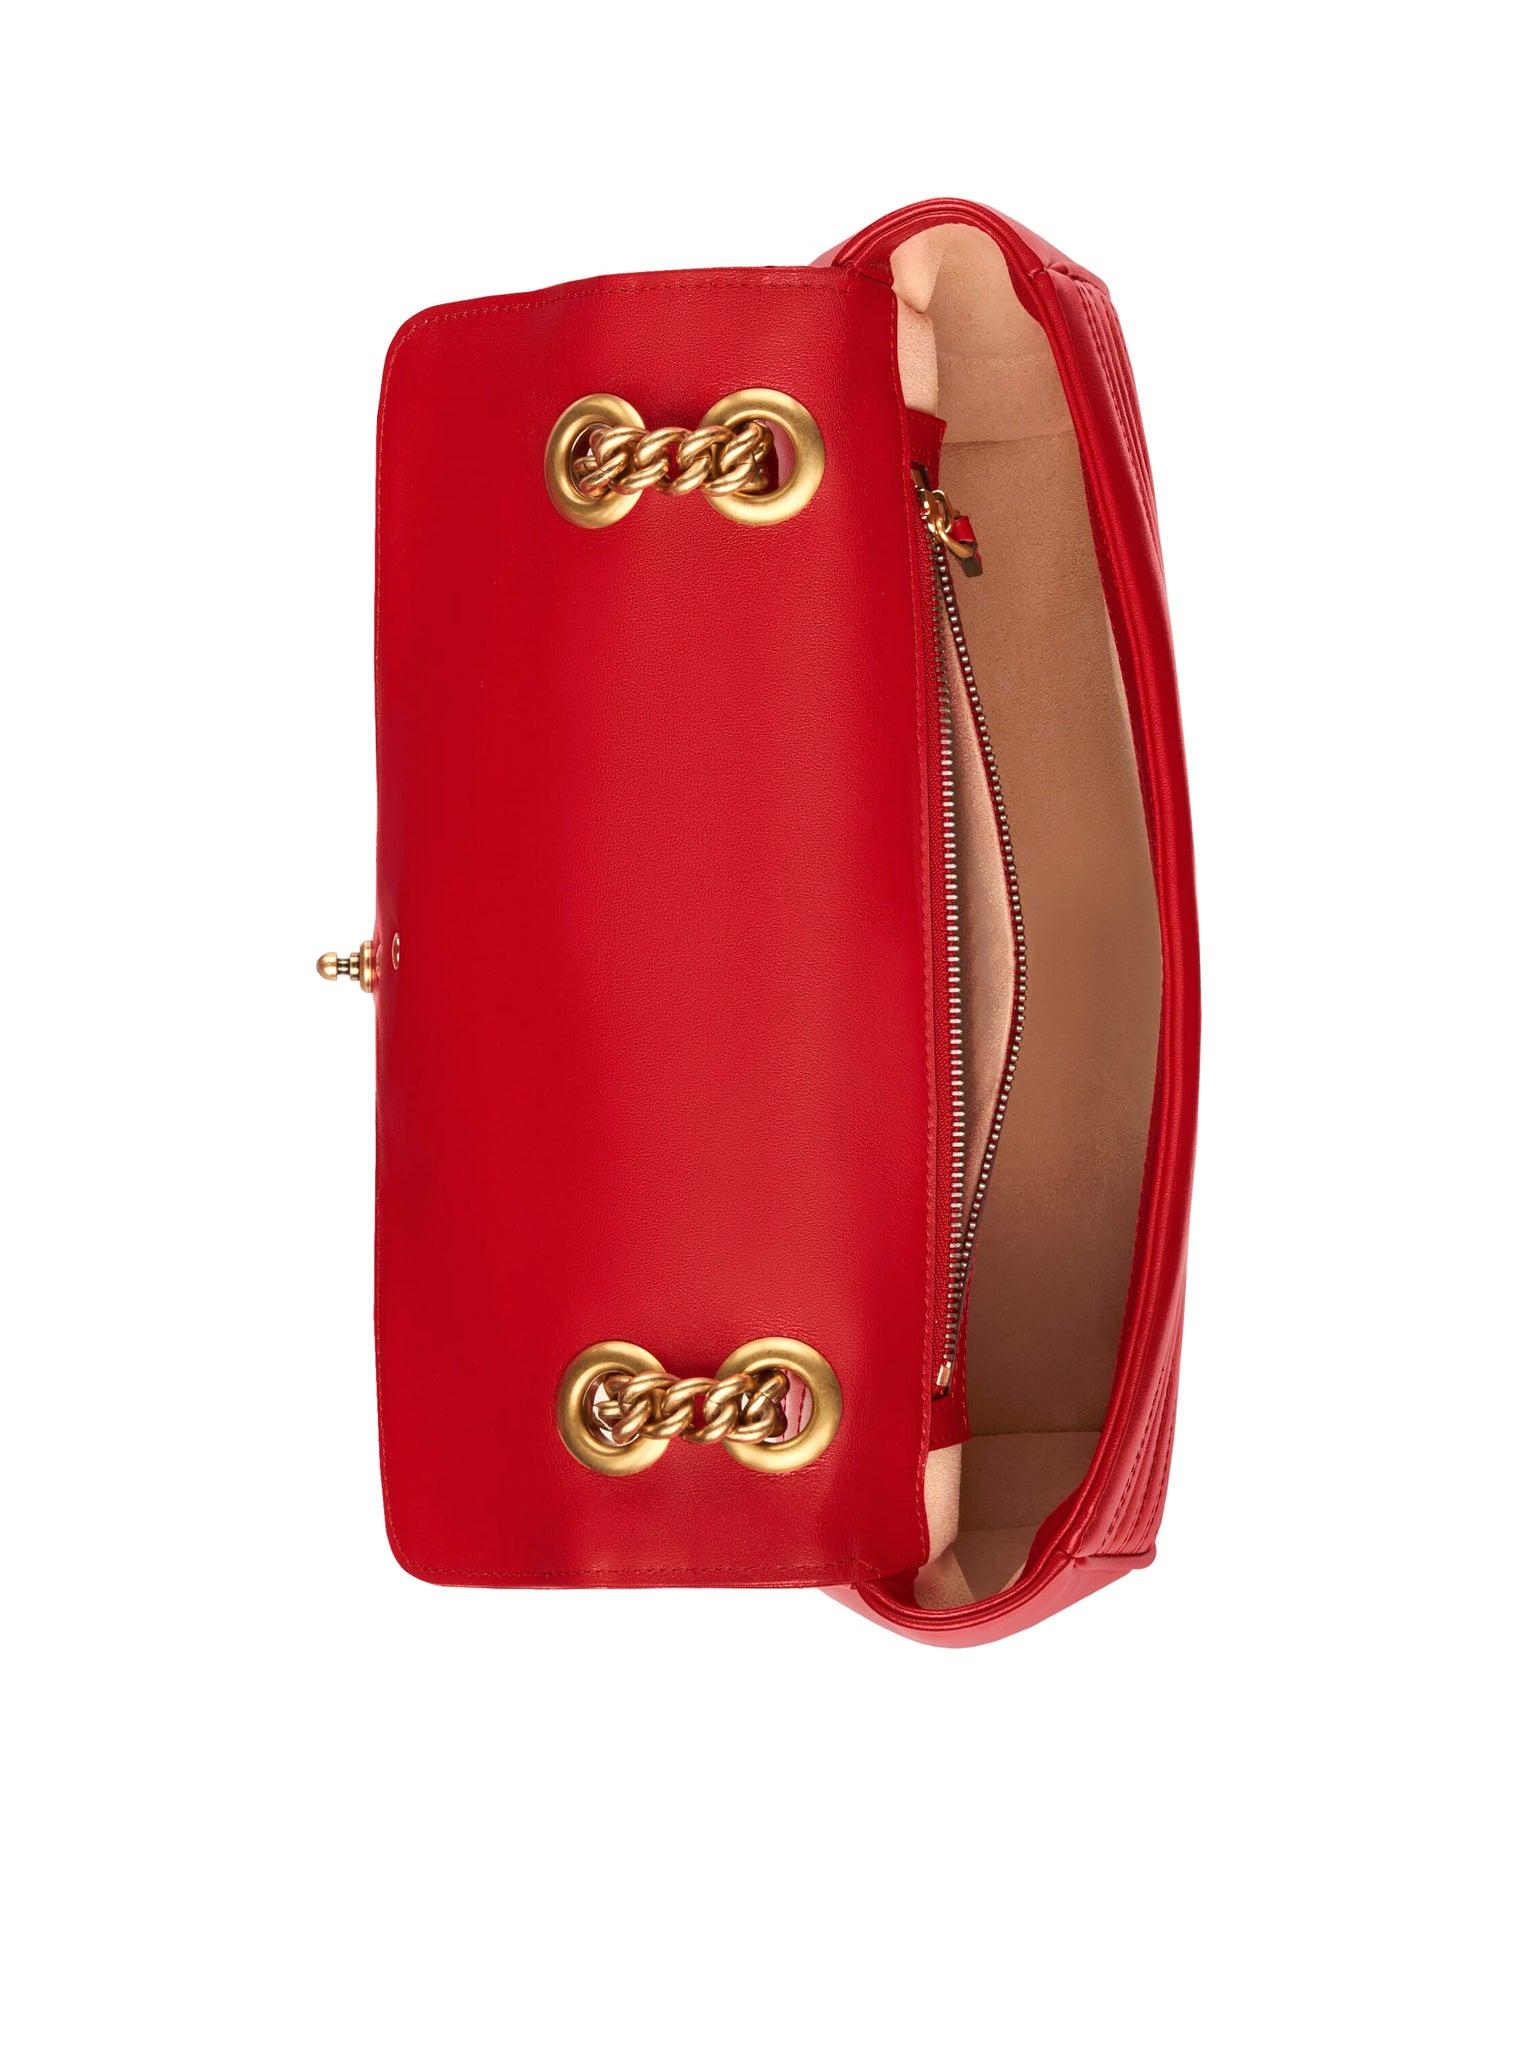 Gucci Red Velvet GG Marmont Small Shoulder Bag